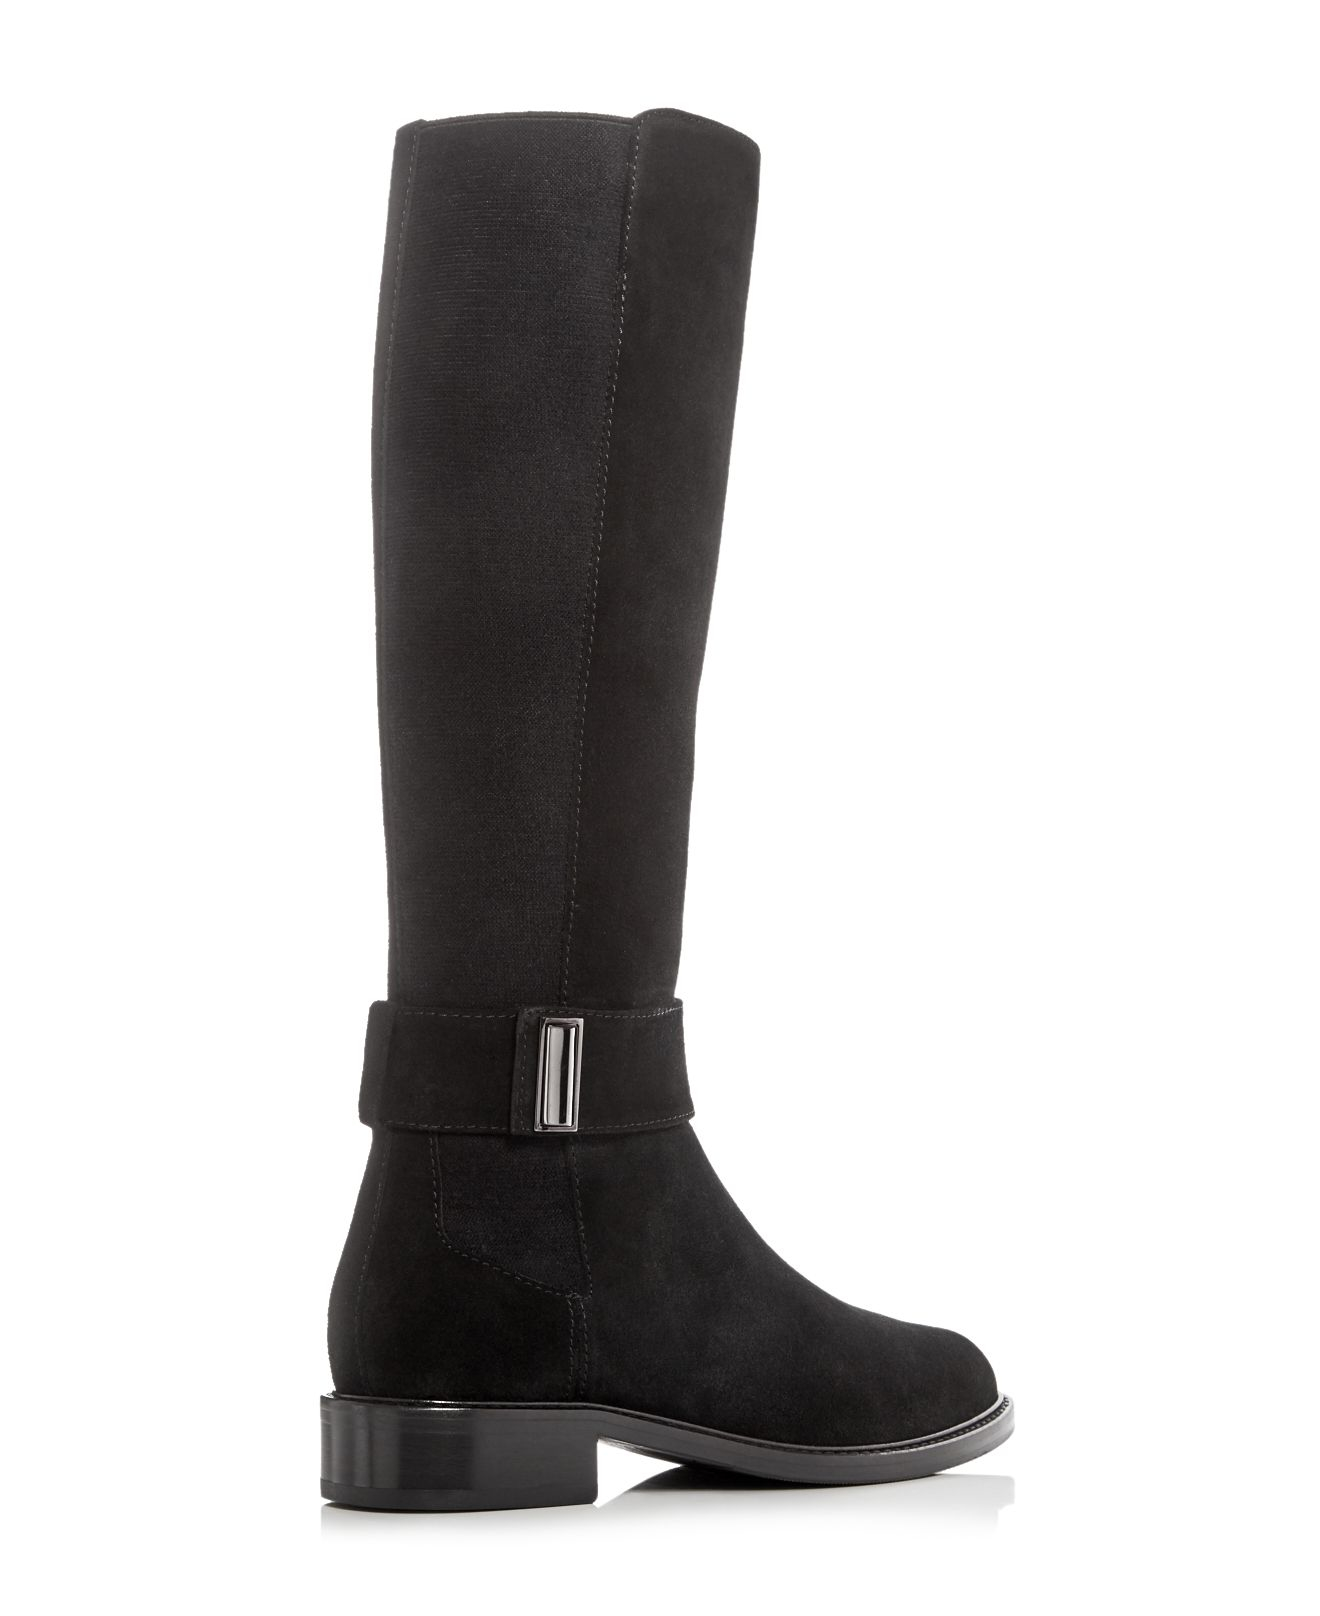 Lyst - Aquatalia Giada Weatherproof Suede Tall Boots in Black